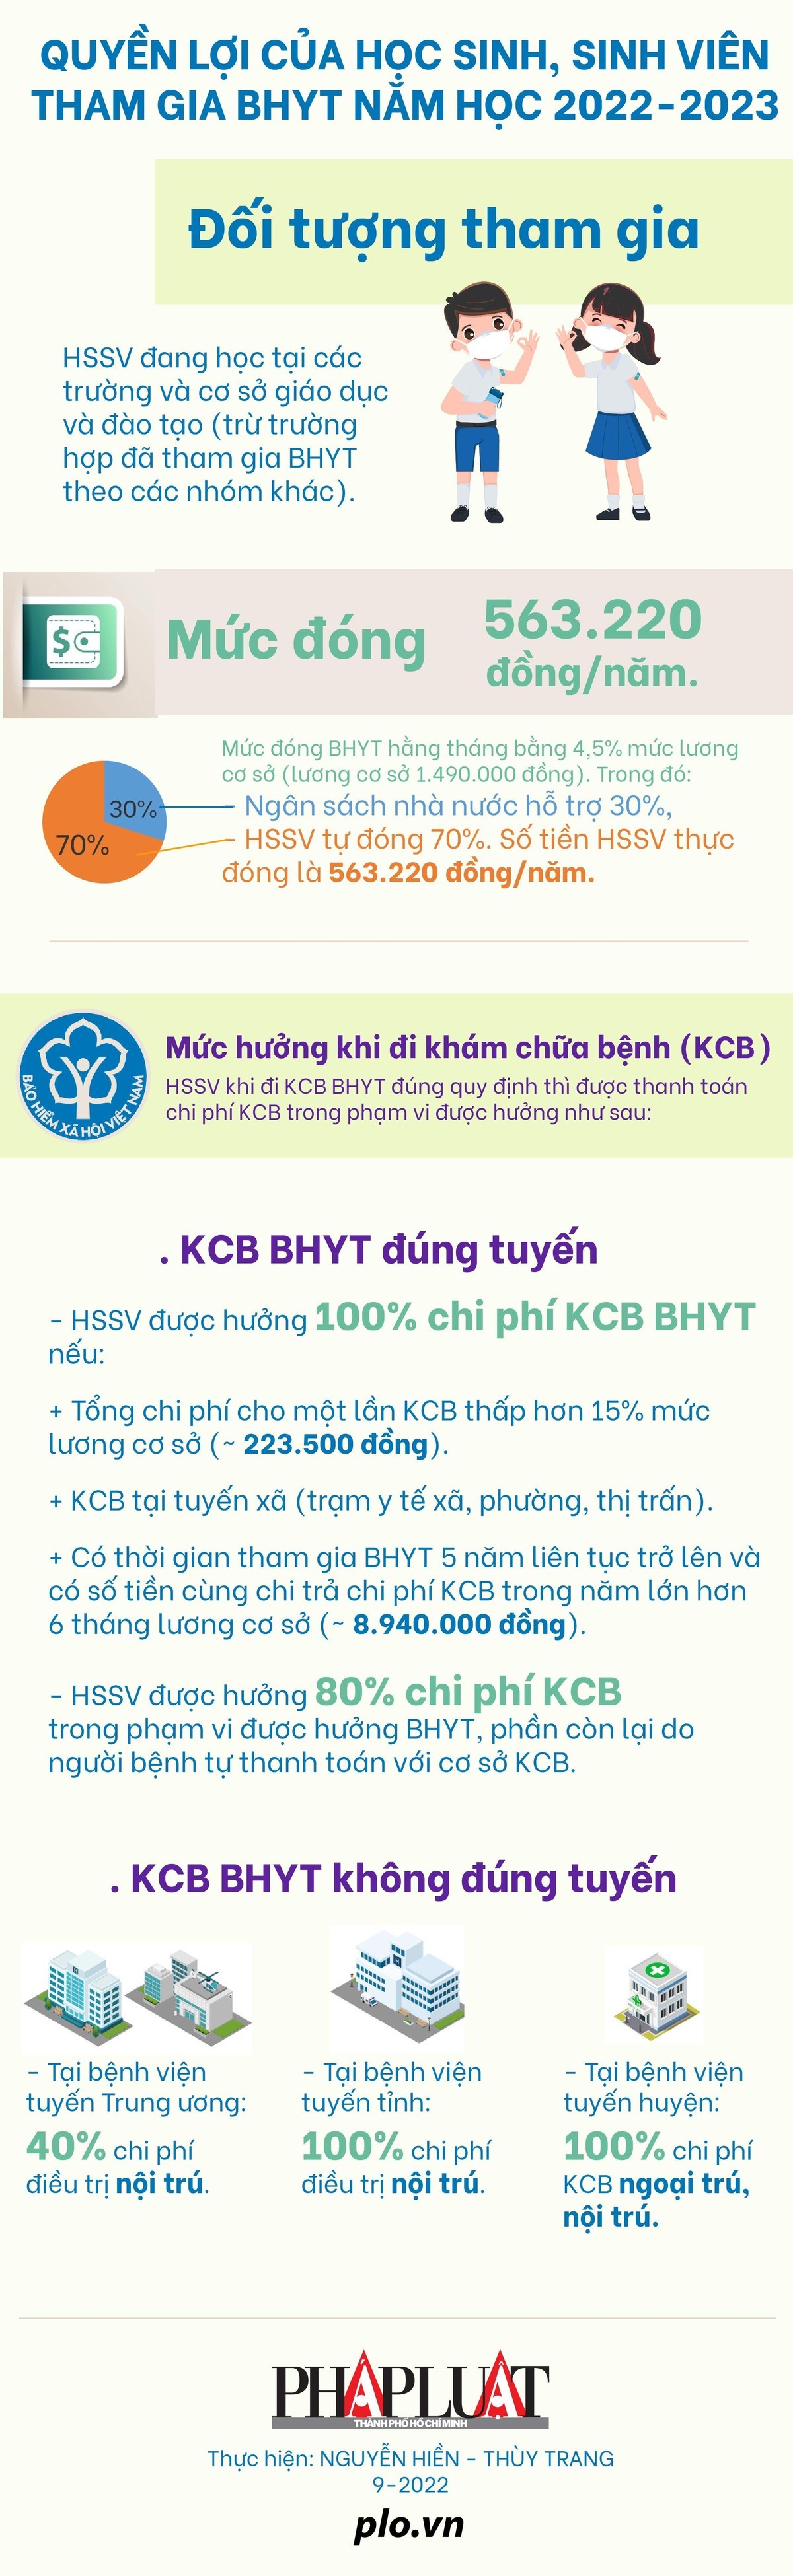 infographic-quyen-loi-bhyt-hoc-sinh-hssv-2022-2023-01-6494-1663552473.jpg